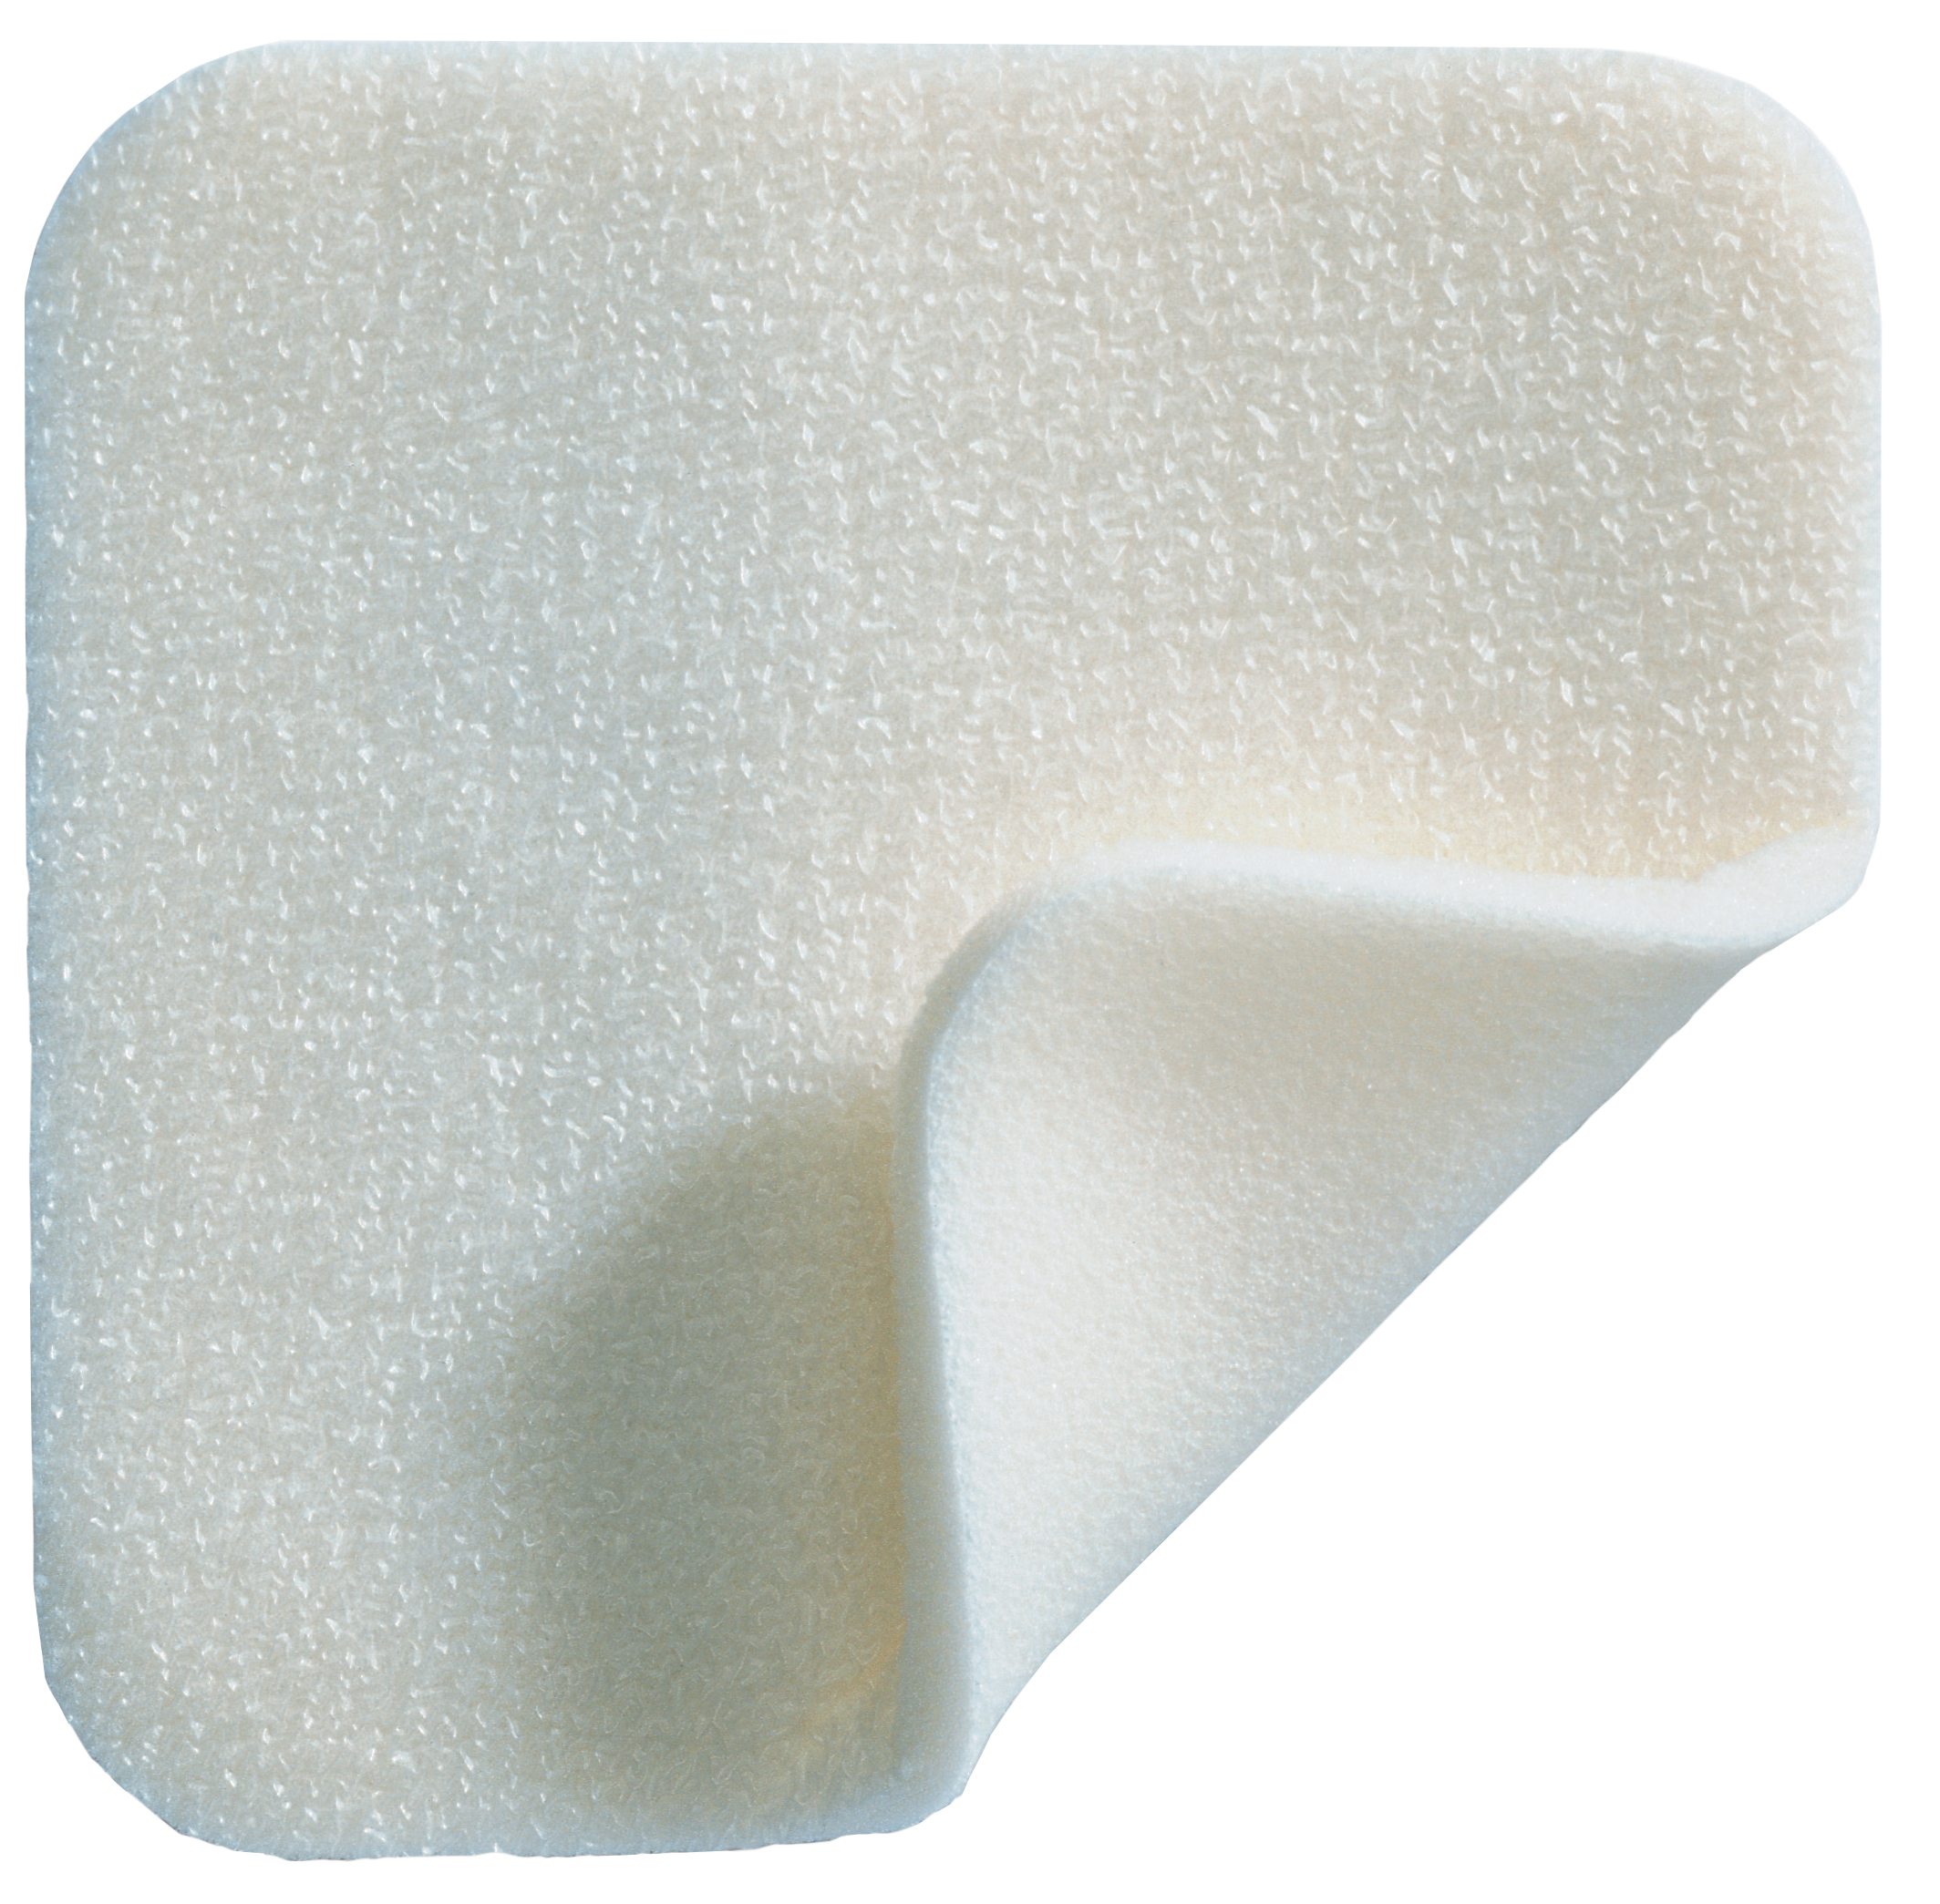 Mepilex Absorbent Foam Silicone Dressing 10cm x 10cm image 0